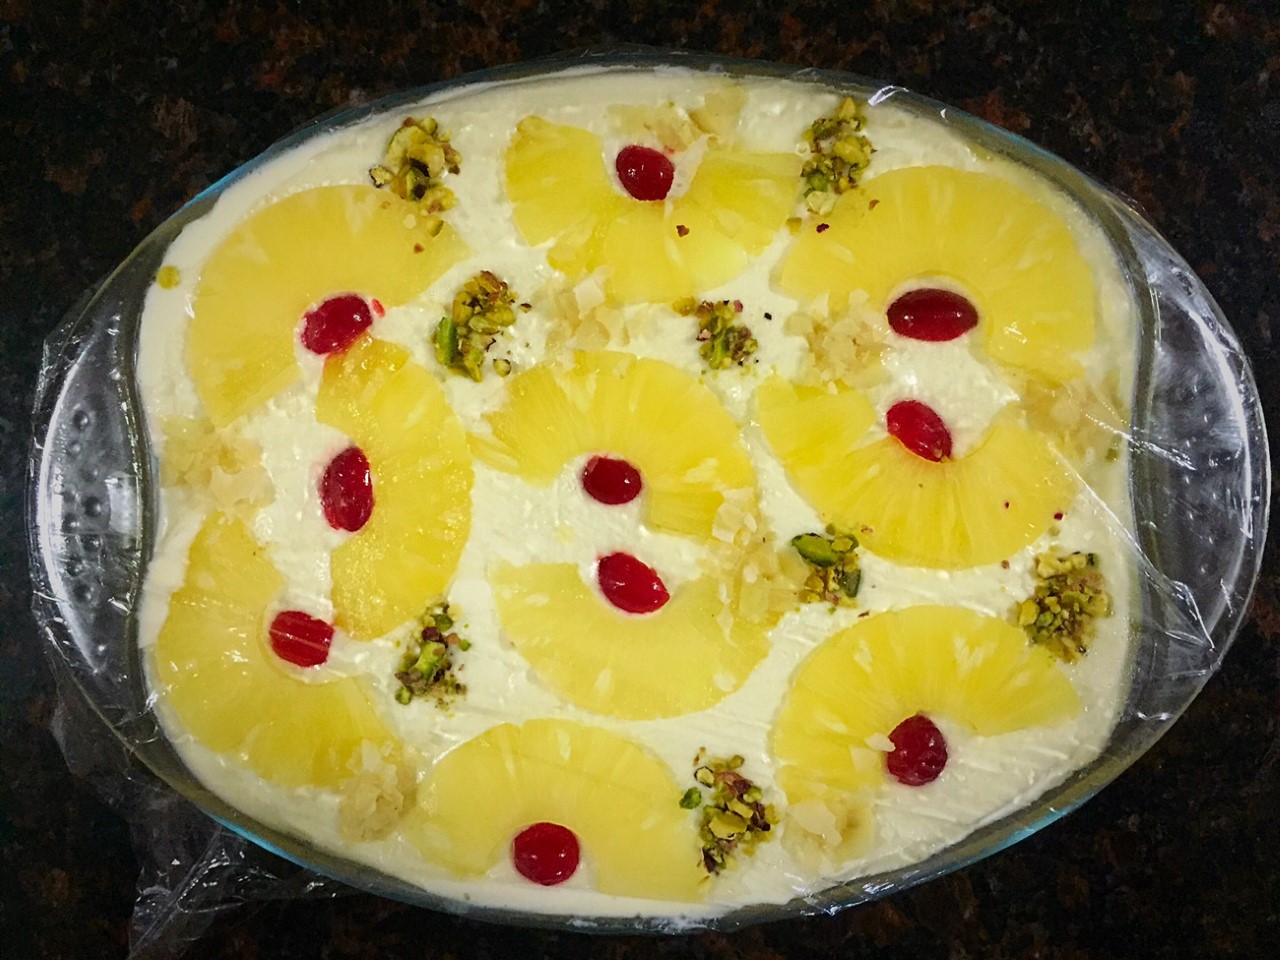 Pineapple desserts / pudding